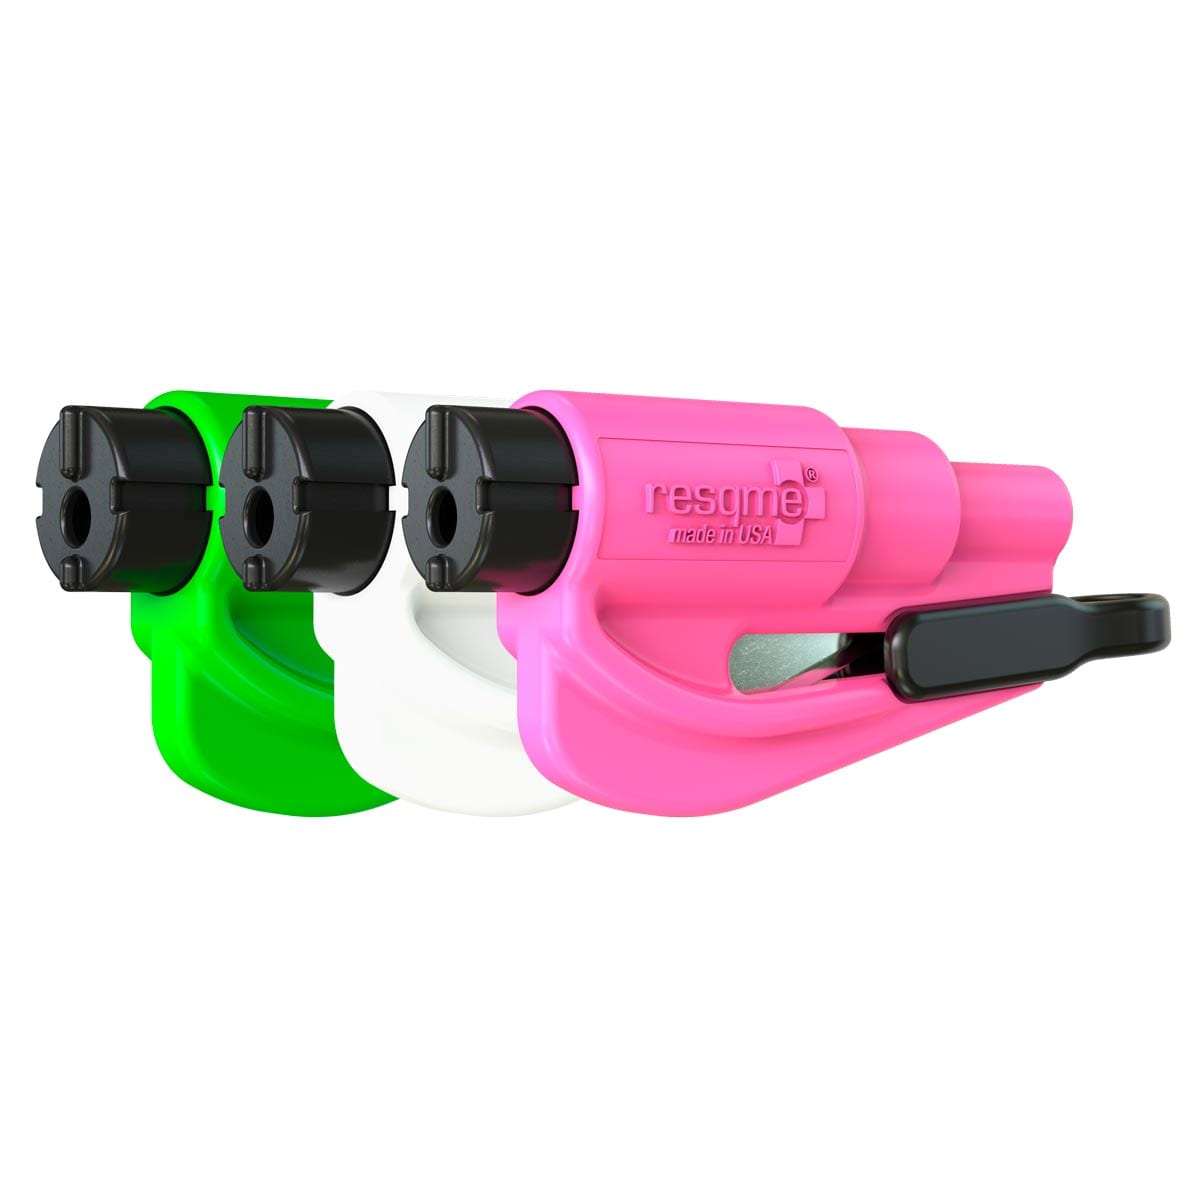 resqme® Car Escape Tool, Seatbelt Cutter / Window Breaker – Pack of 3 Green, White & Pink